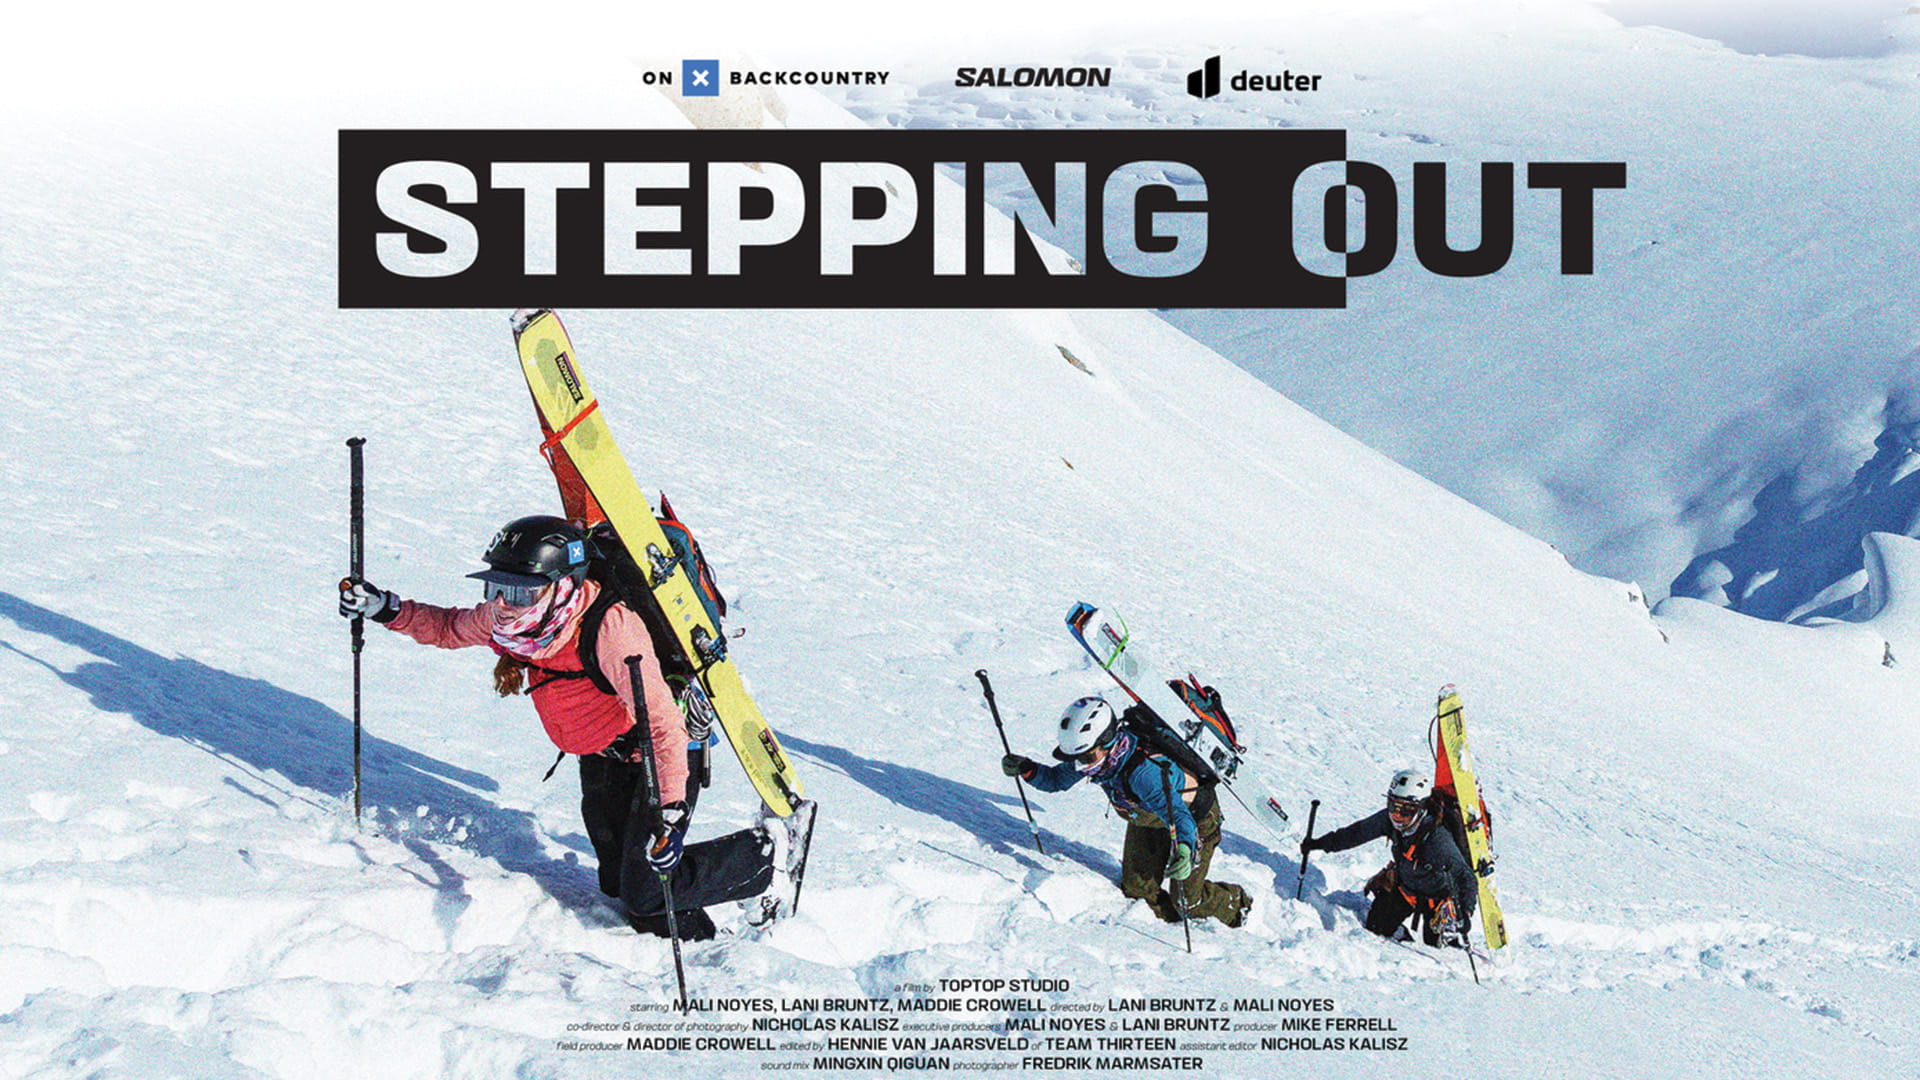 Stepping out ski film screening